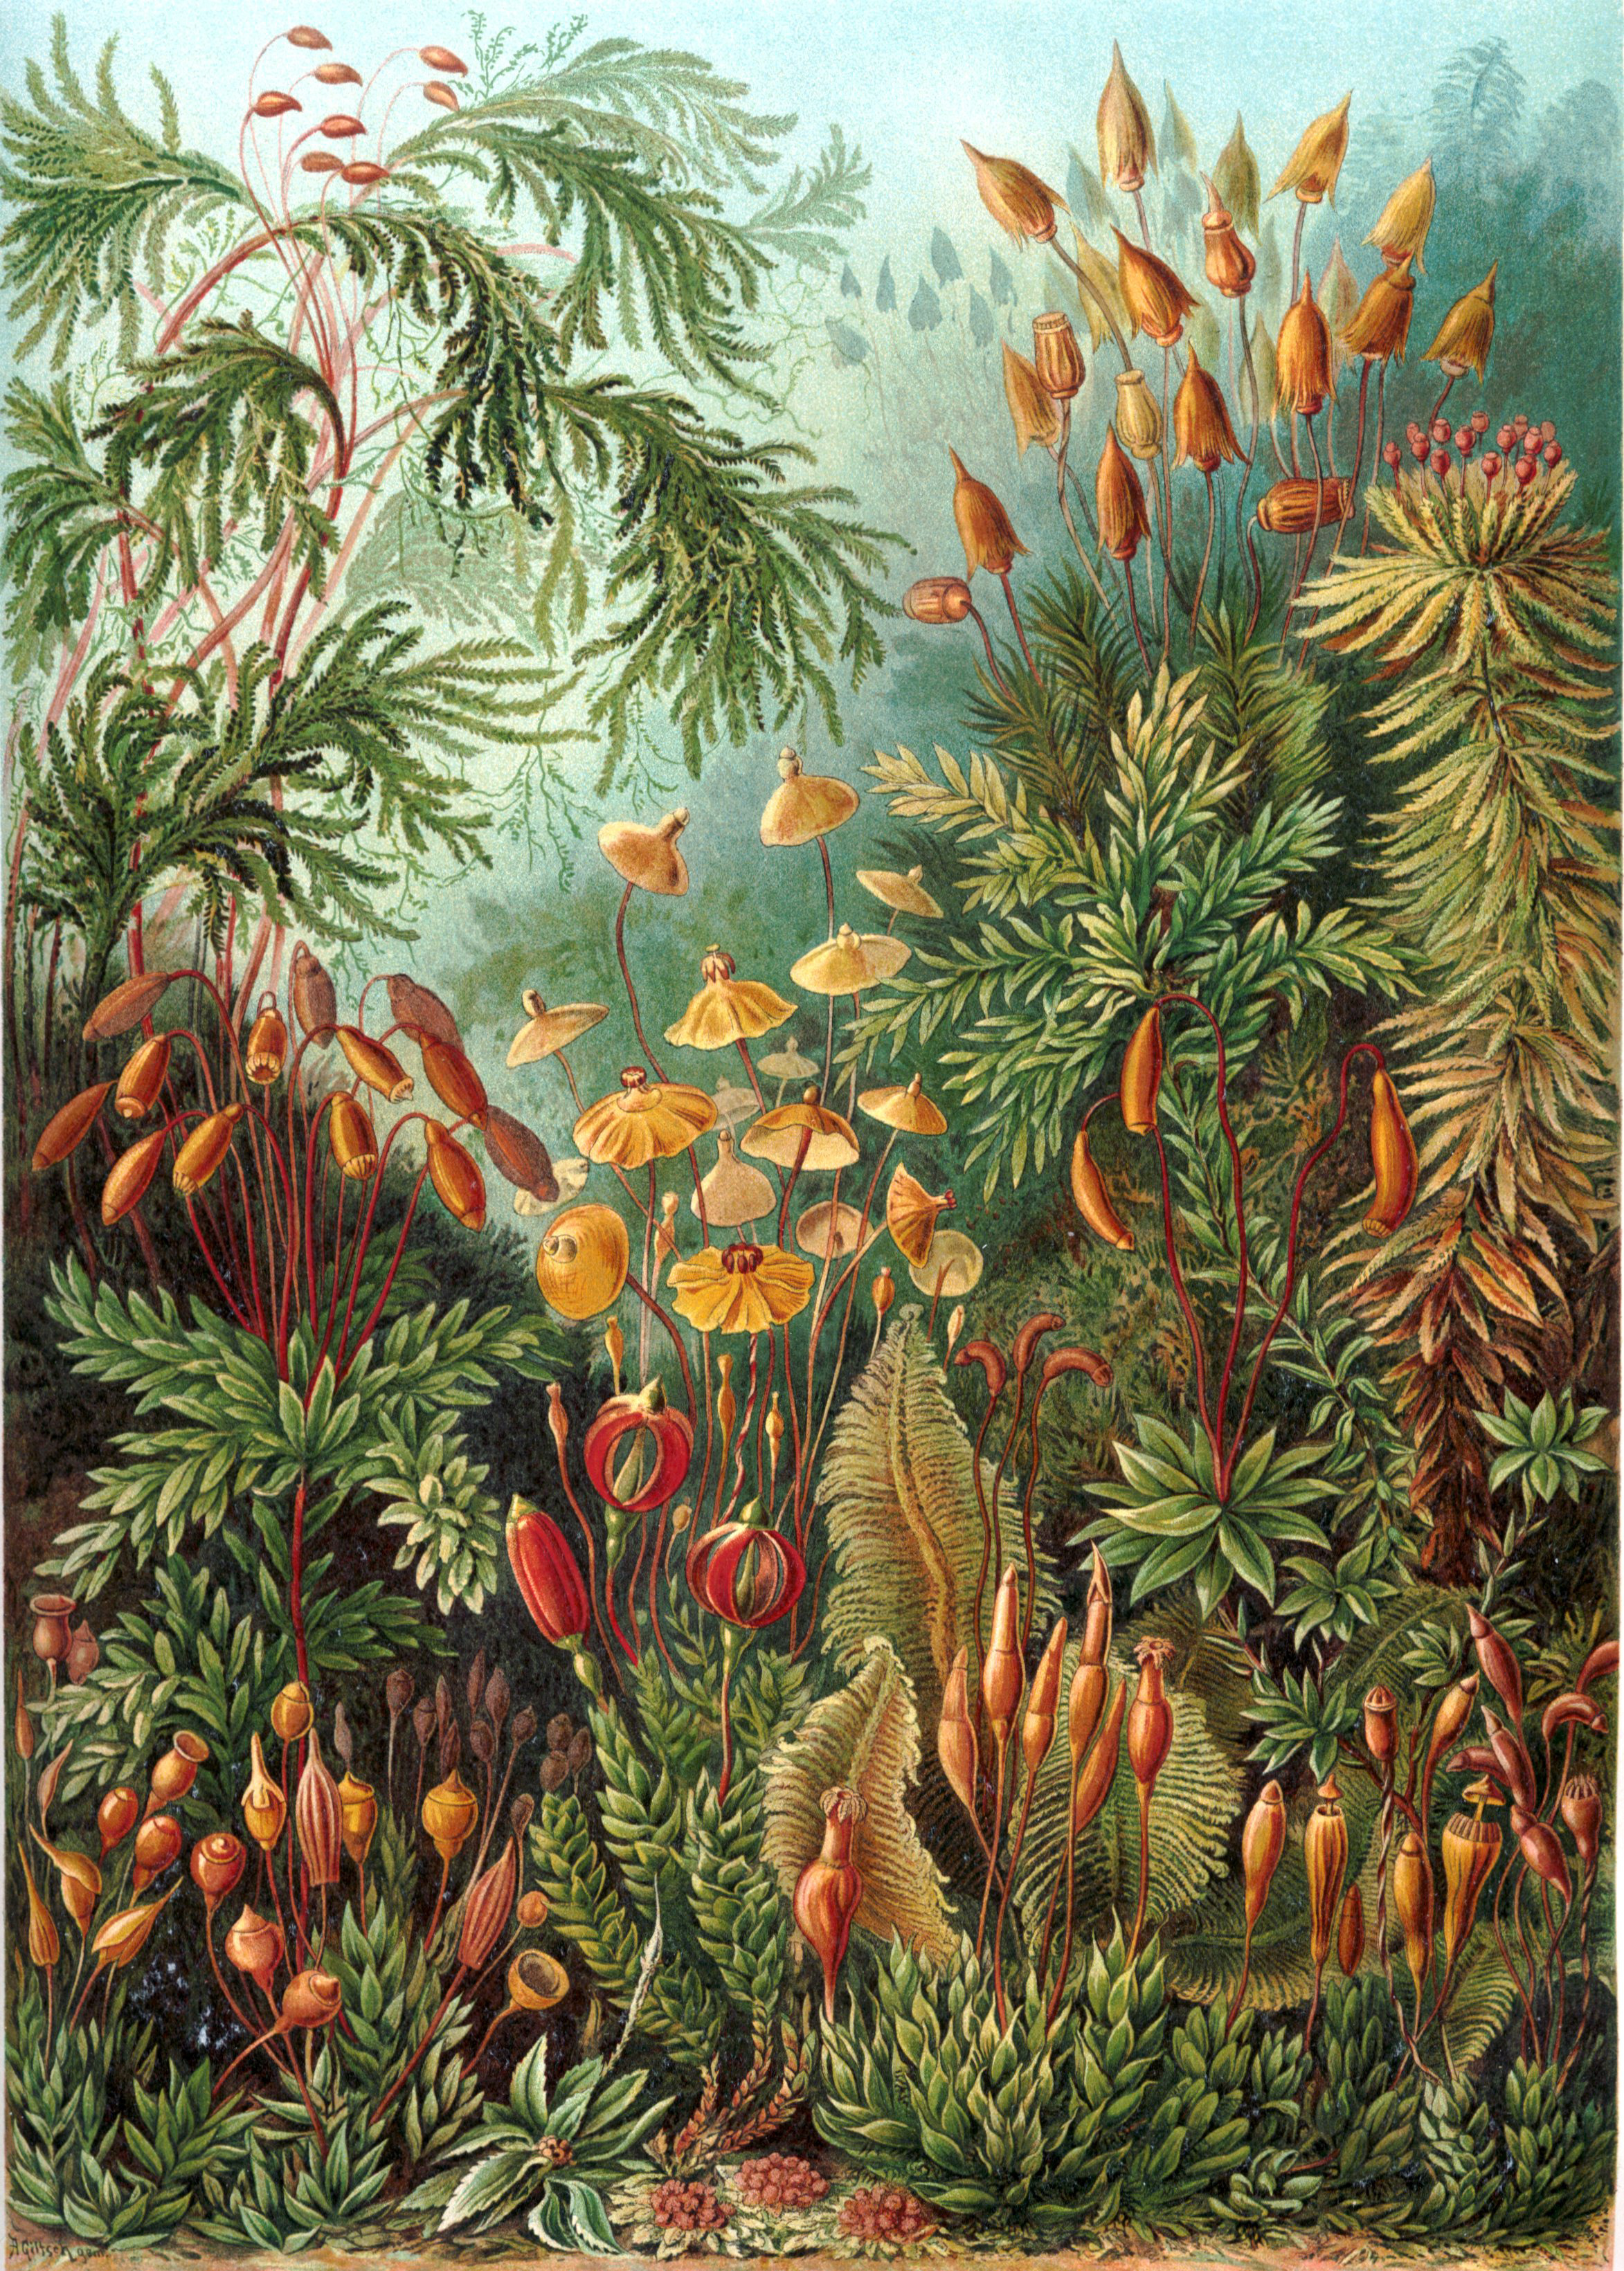 Mosses from Ernst Haeckel’s Kunstformen der Natur, 1904.